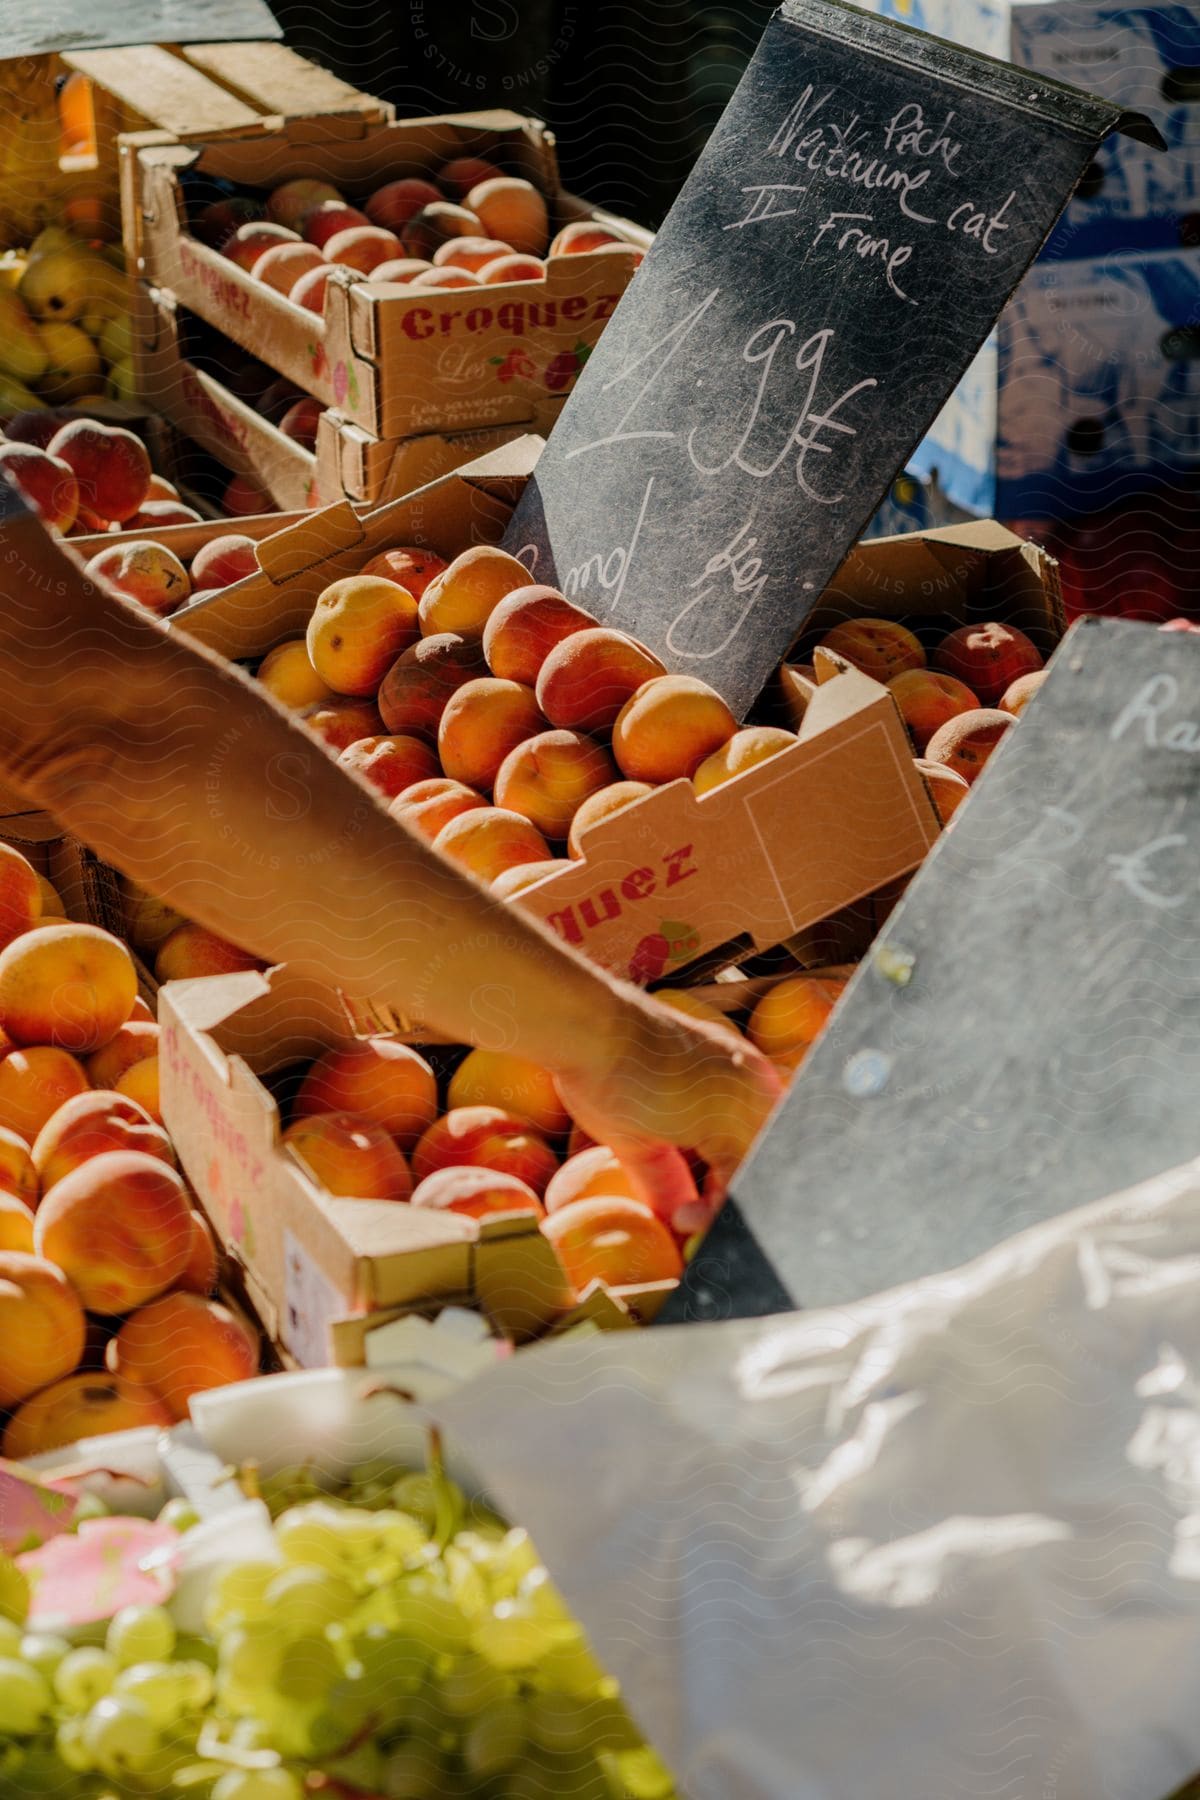 An orange fruit at a market